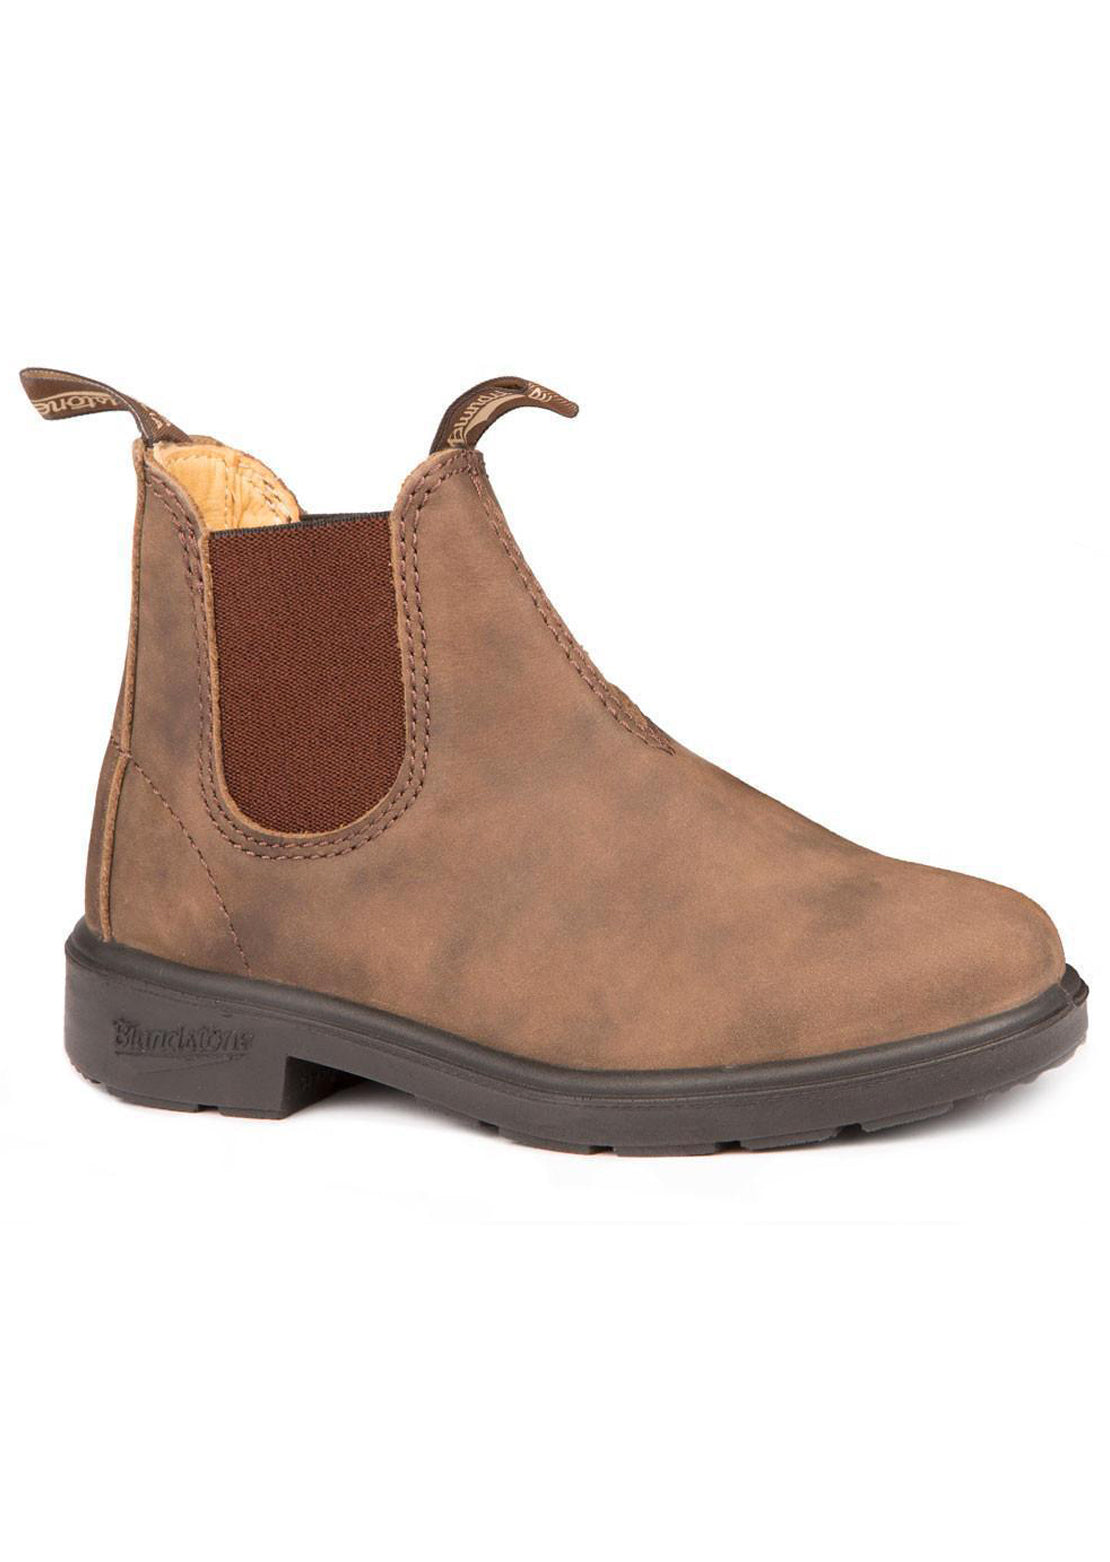 Blundstone Junior 565 Blunnies Boots (565) Rustic Brown